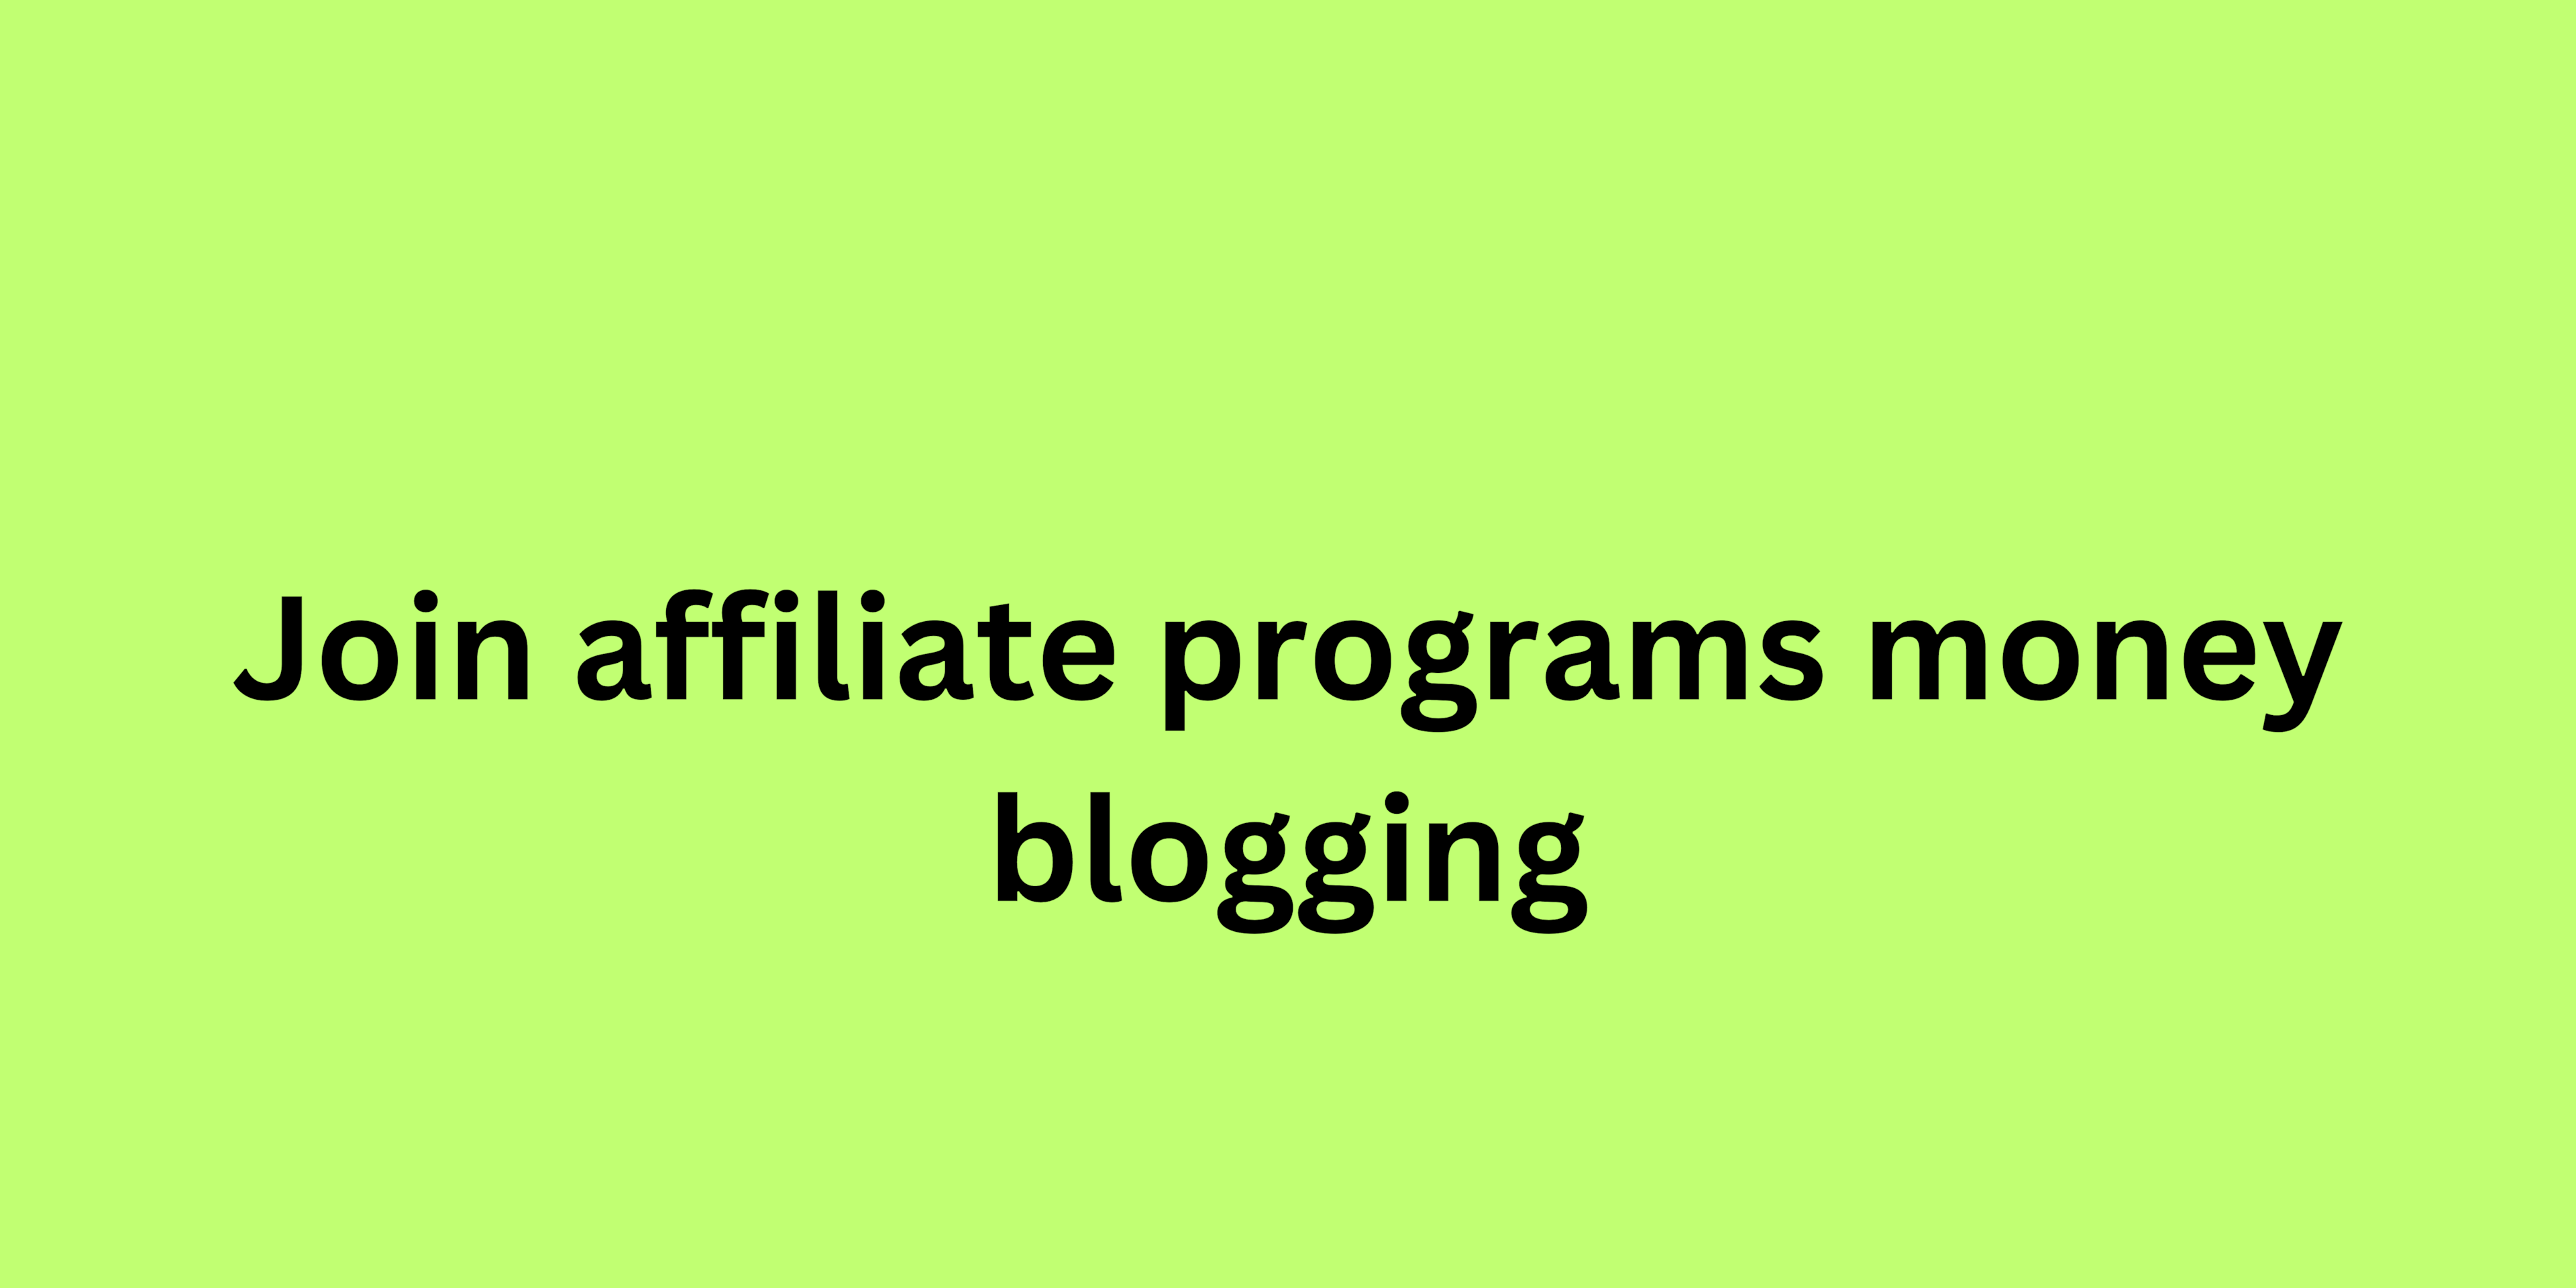 Join affiliate programs money blogging